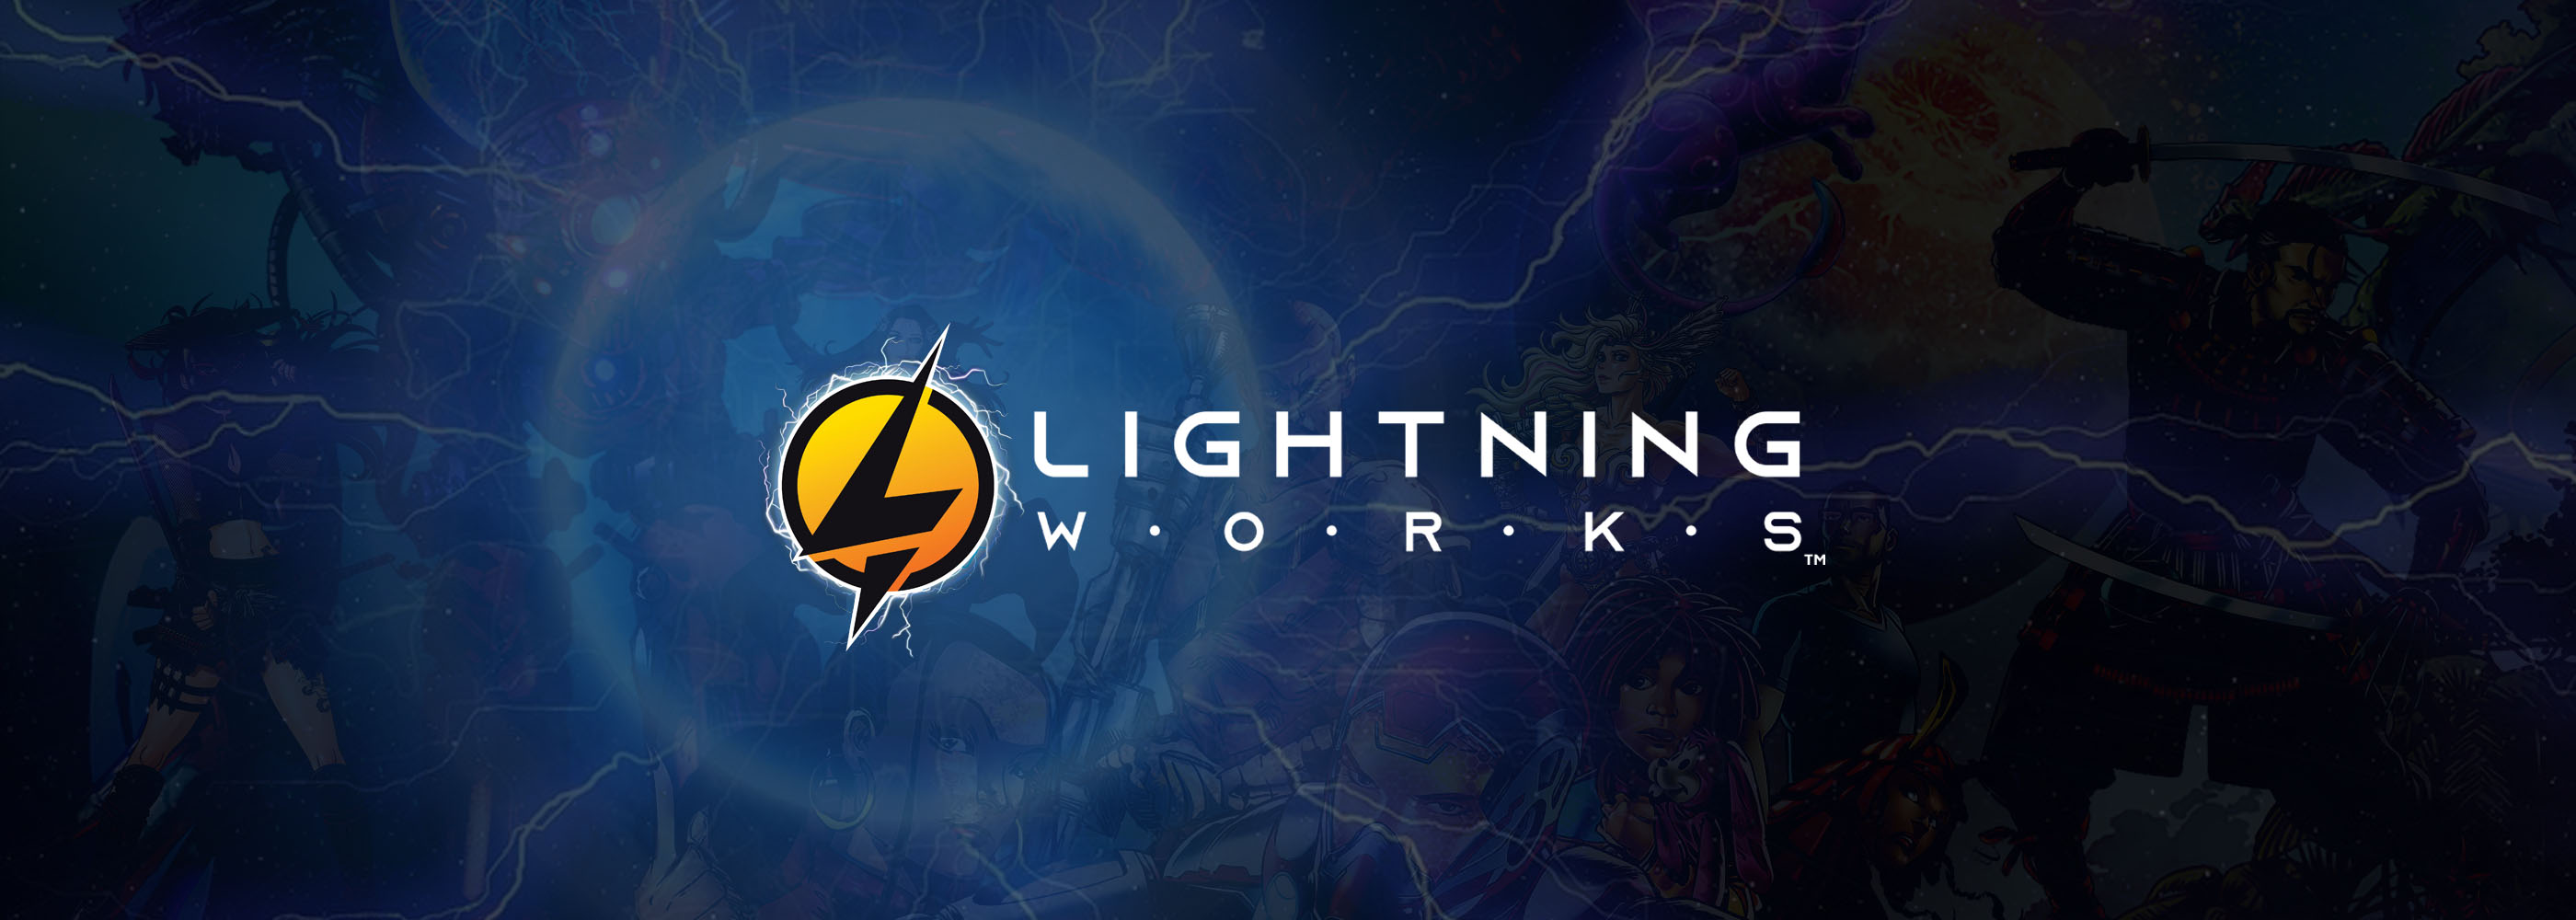 Lightningworks7 橫幅